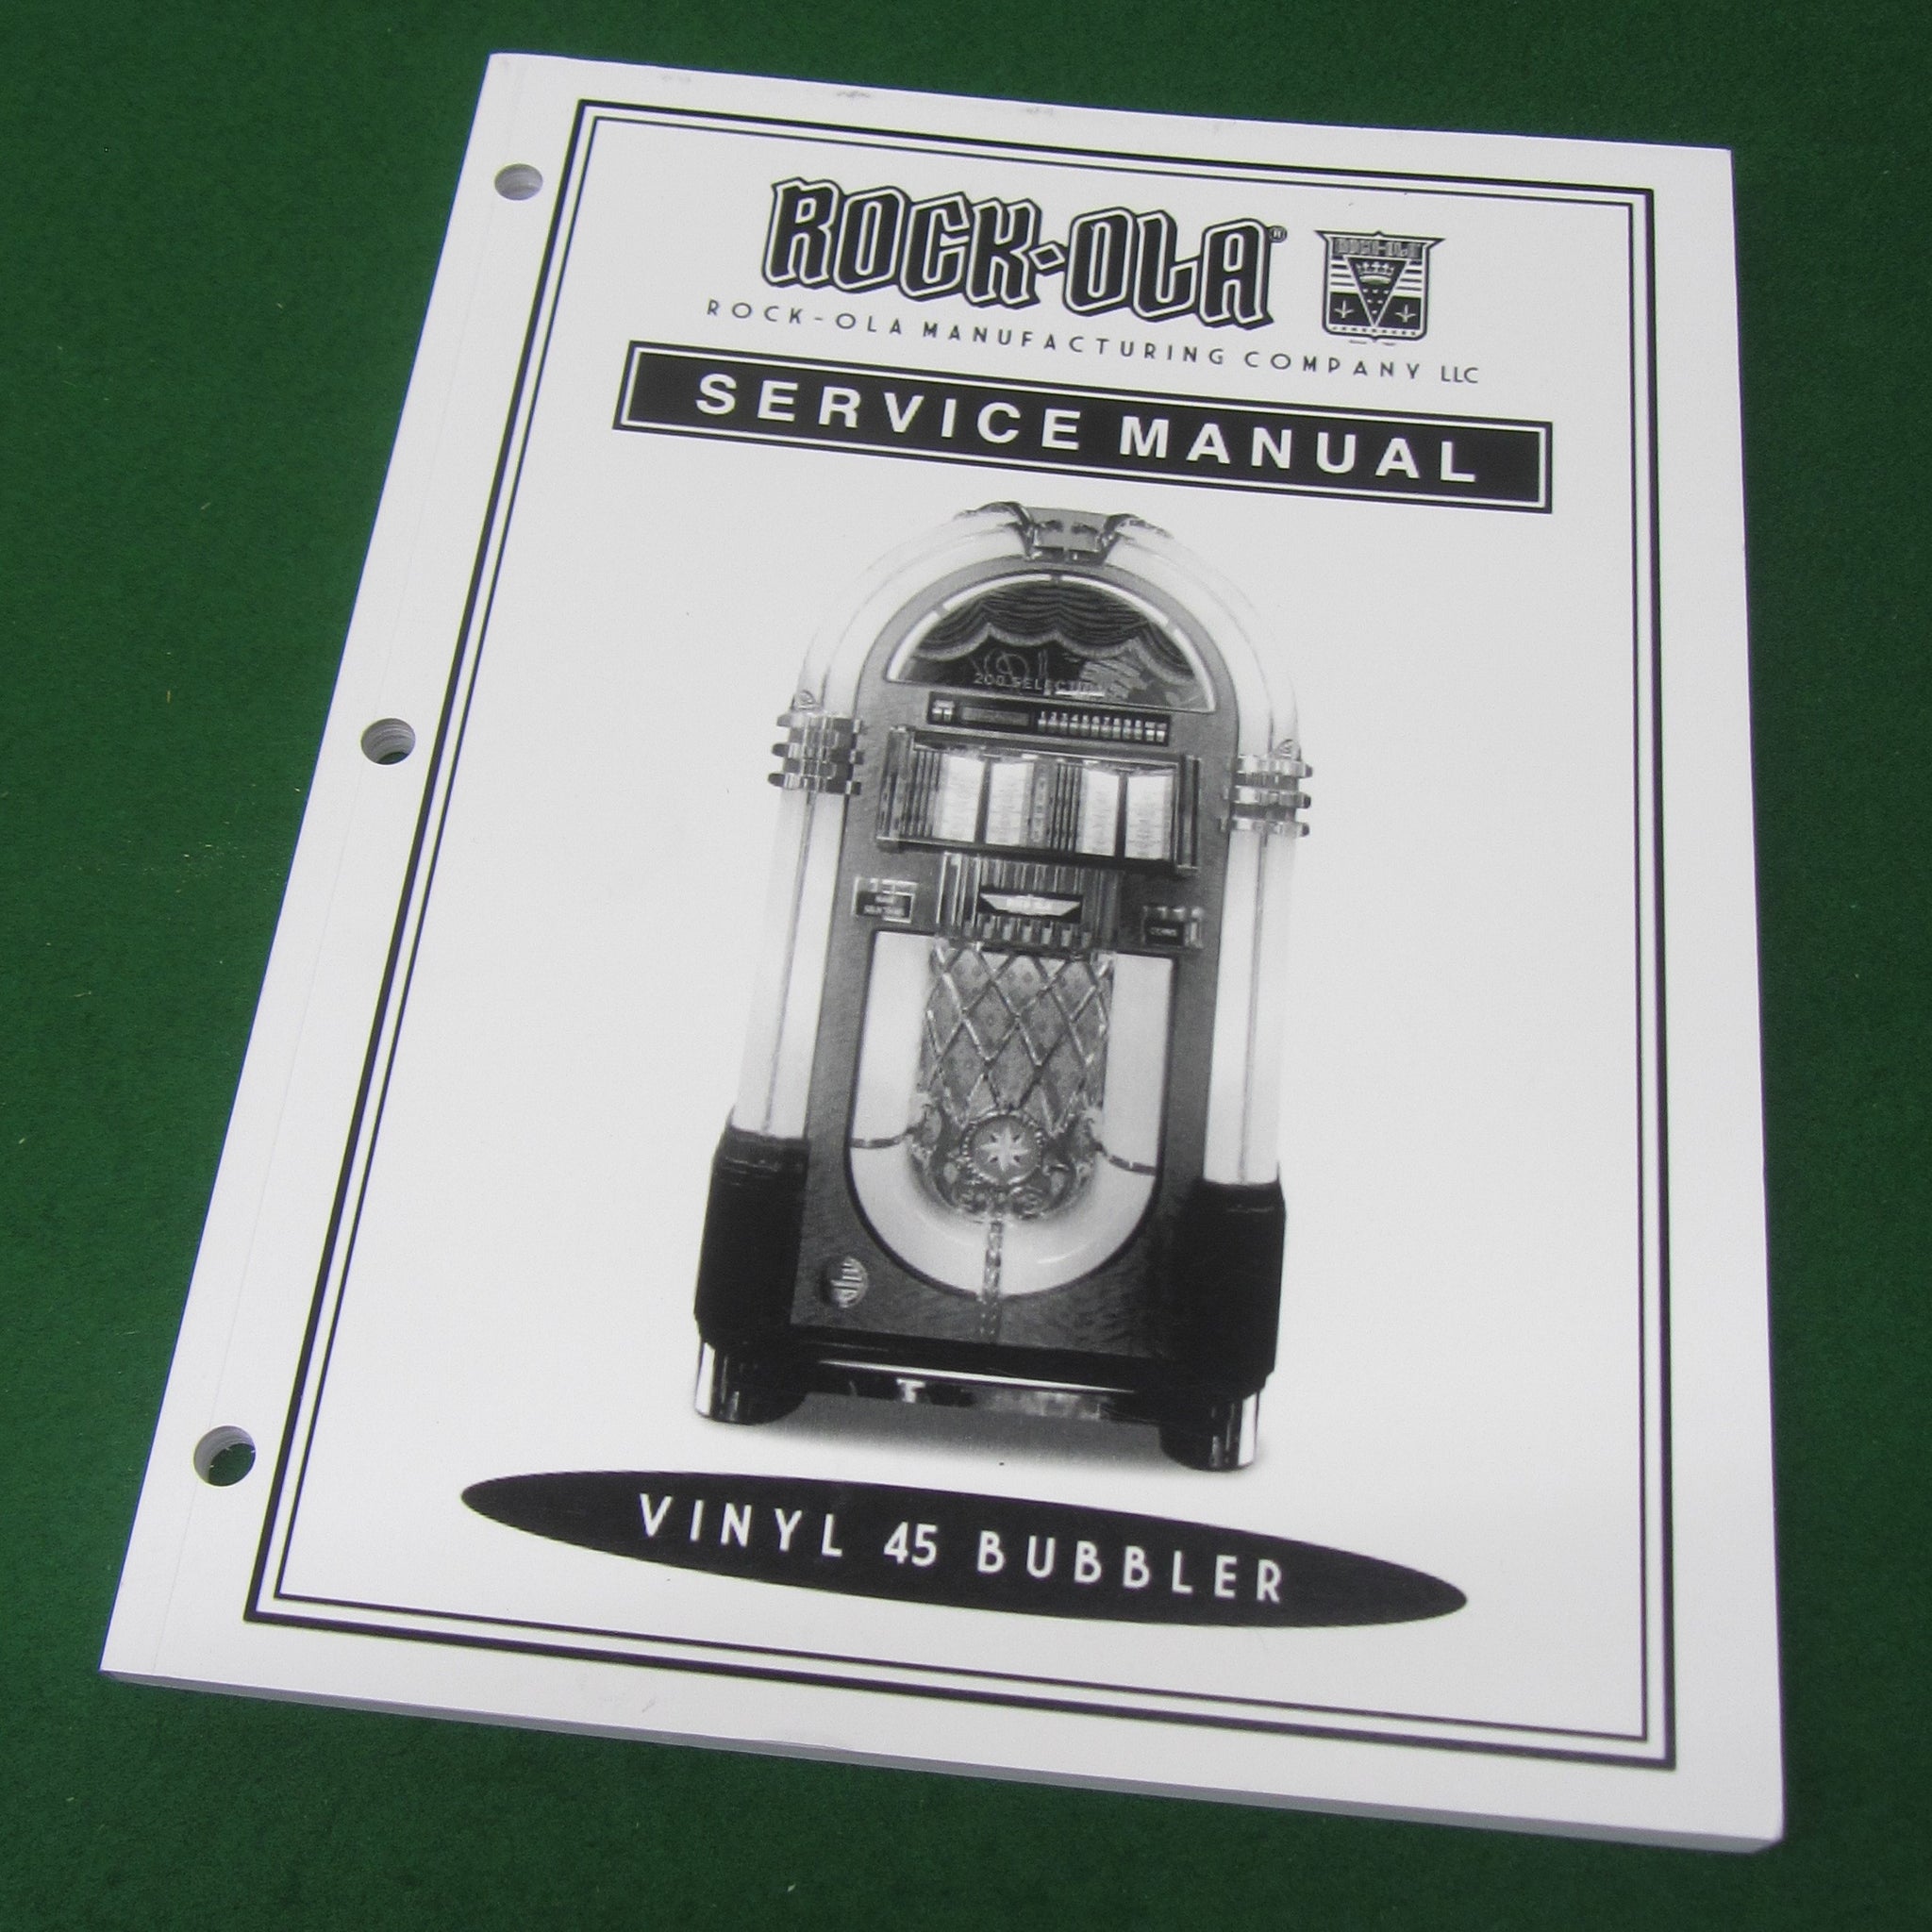 Operation and Service Manual - Vinyl 45 Bubbler - RB8E (62792)